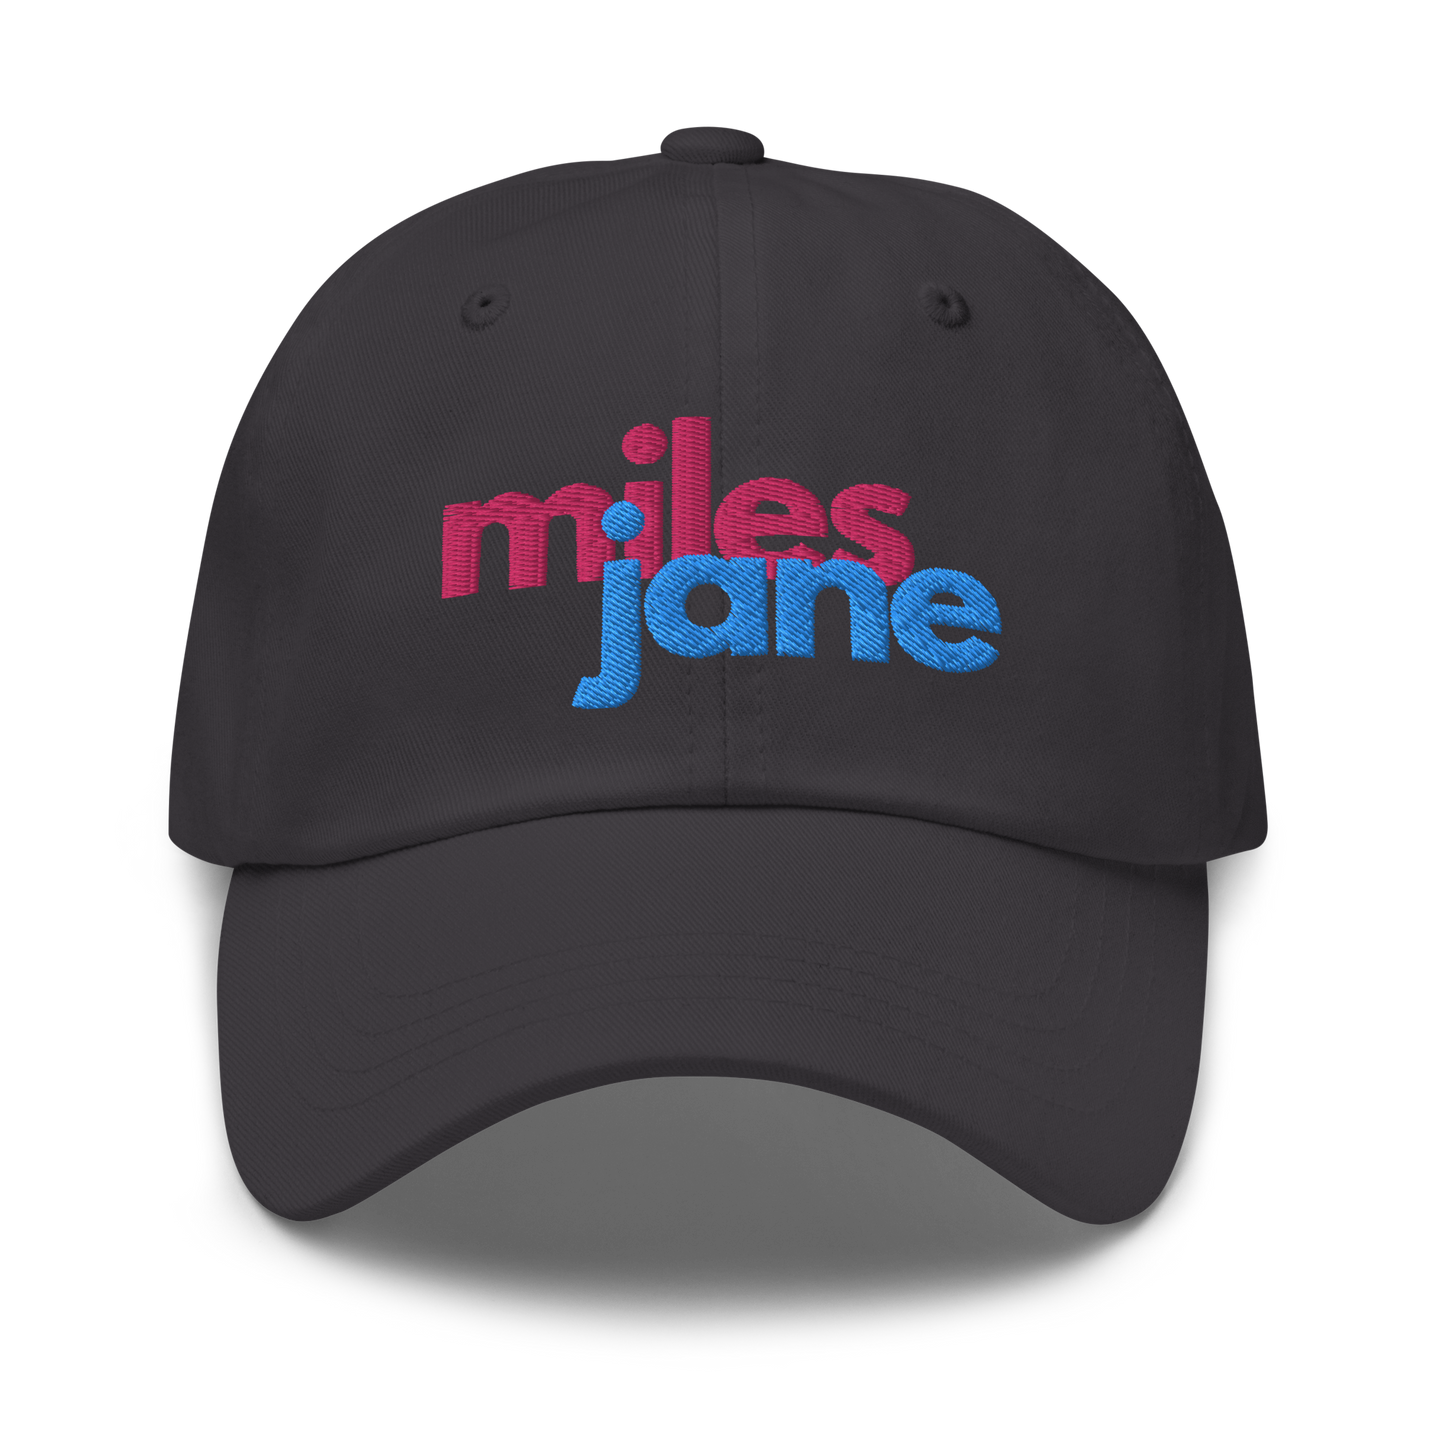 MilesJane - The Classics Hat (Yupoong) - MJC008